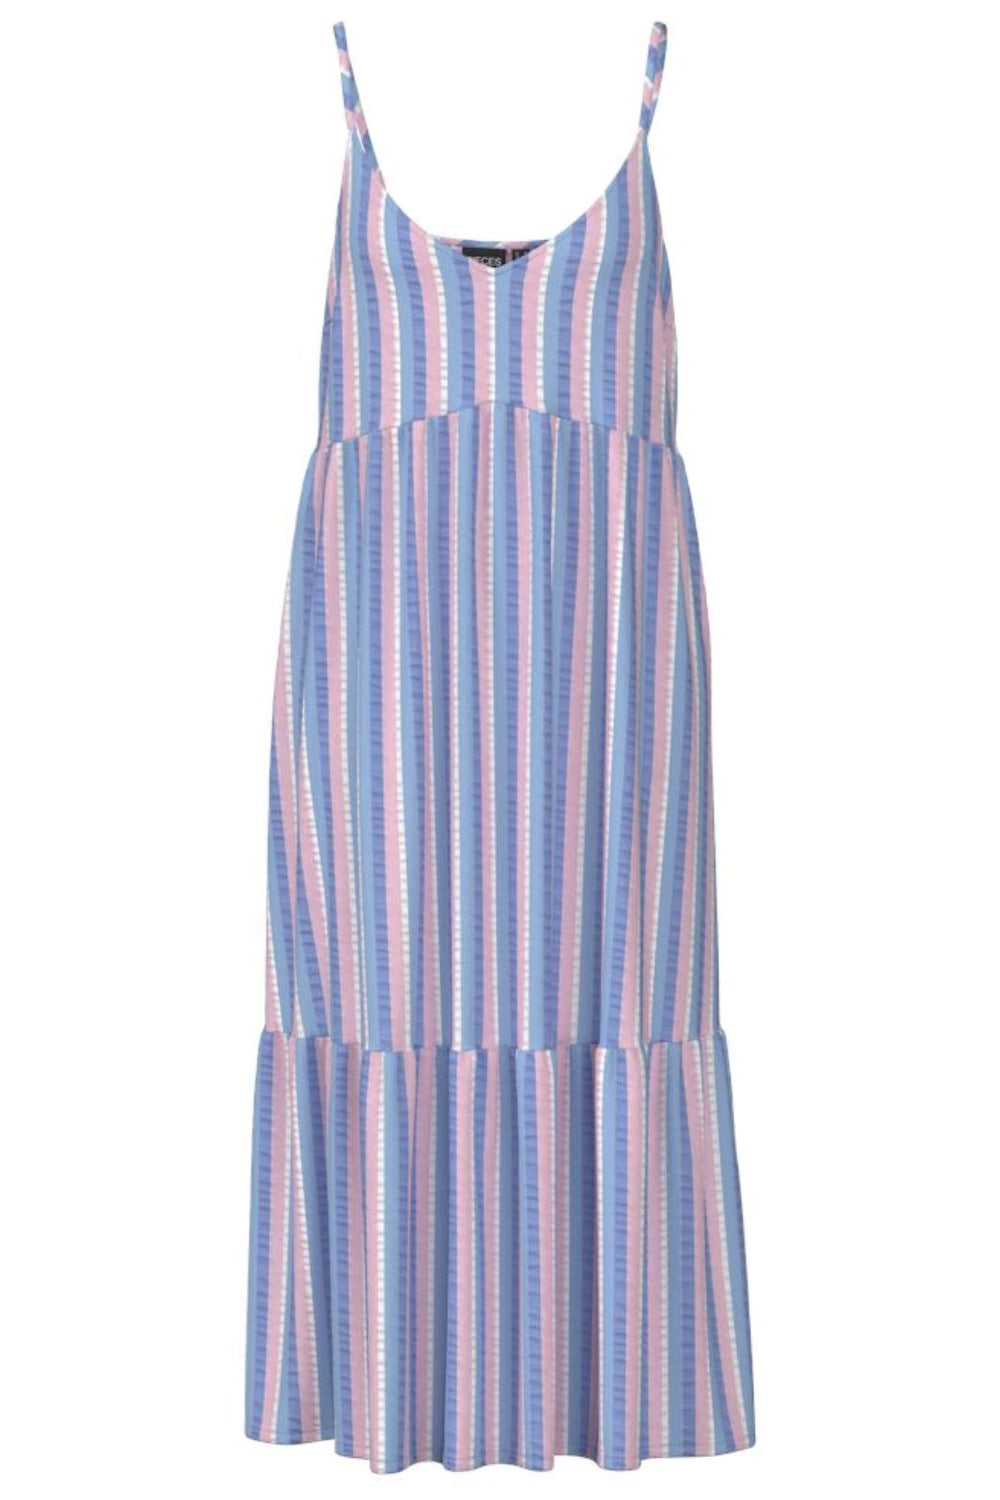 Pieces - Pcaitlyn Sl Dress - 4559114 Hydrangea Multi Stripes Kjoler 